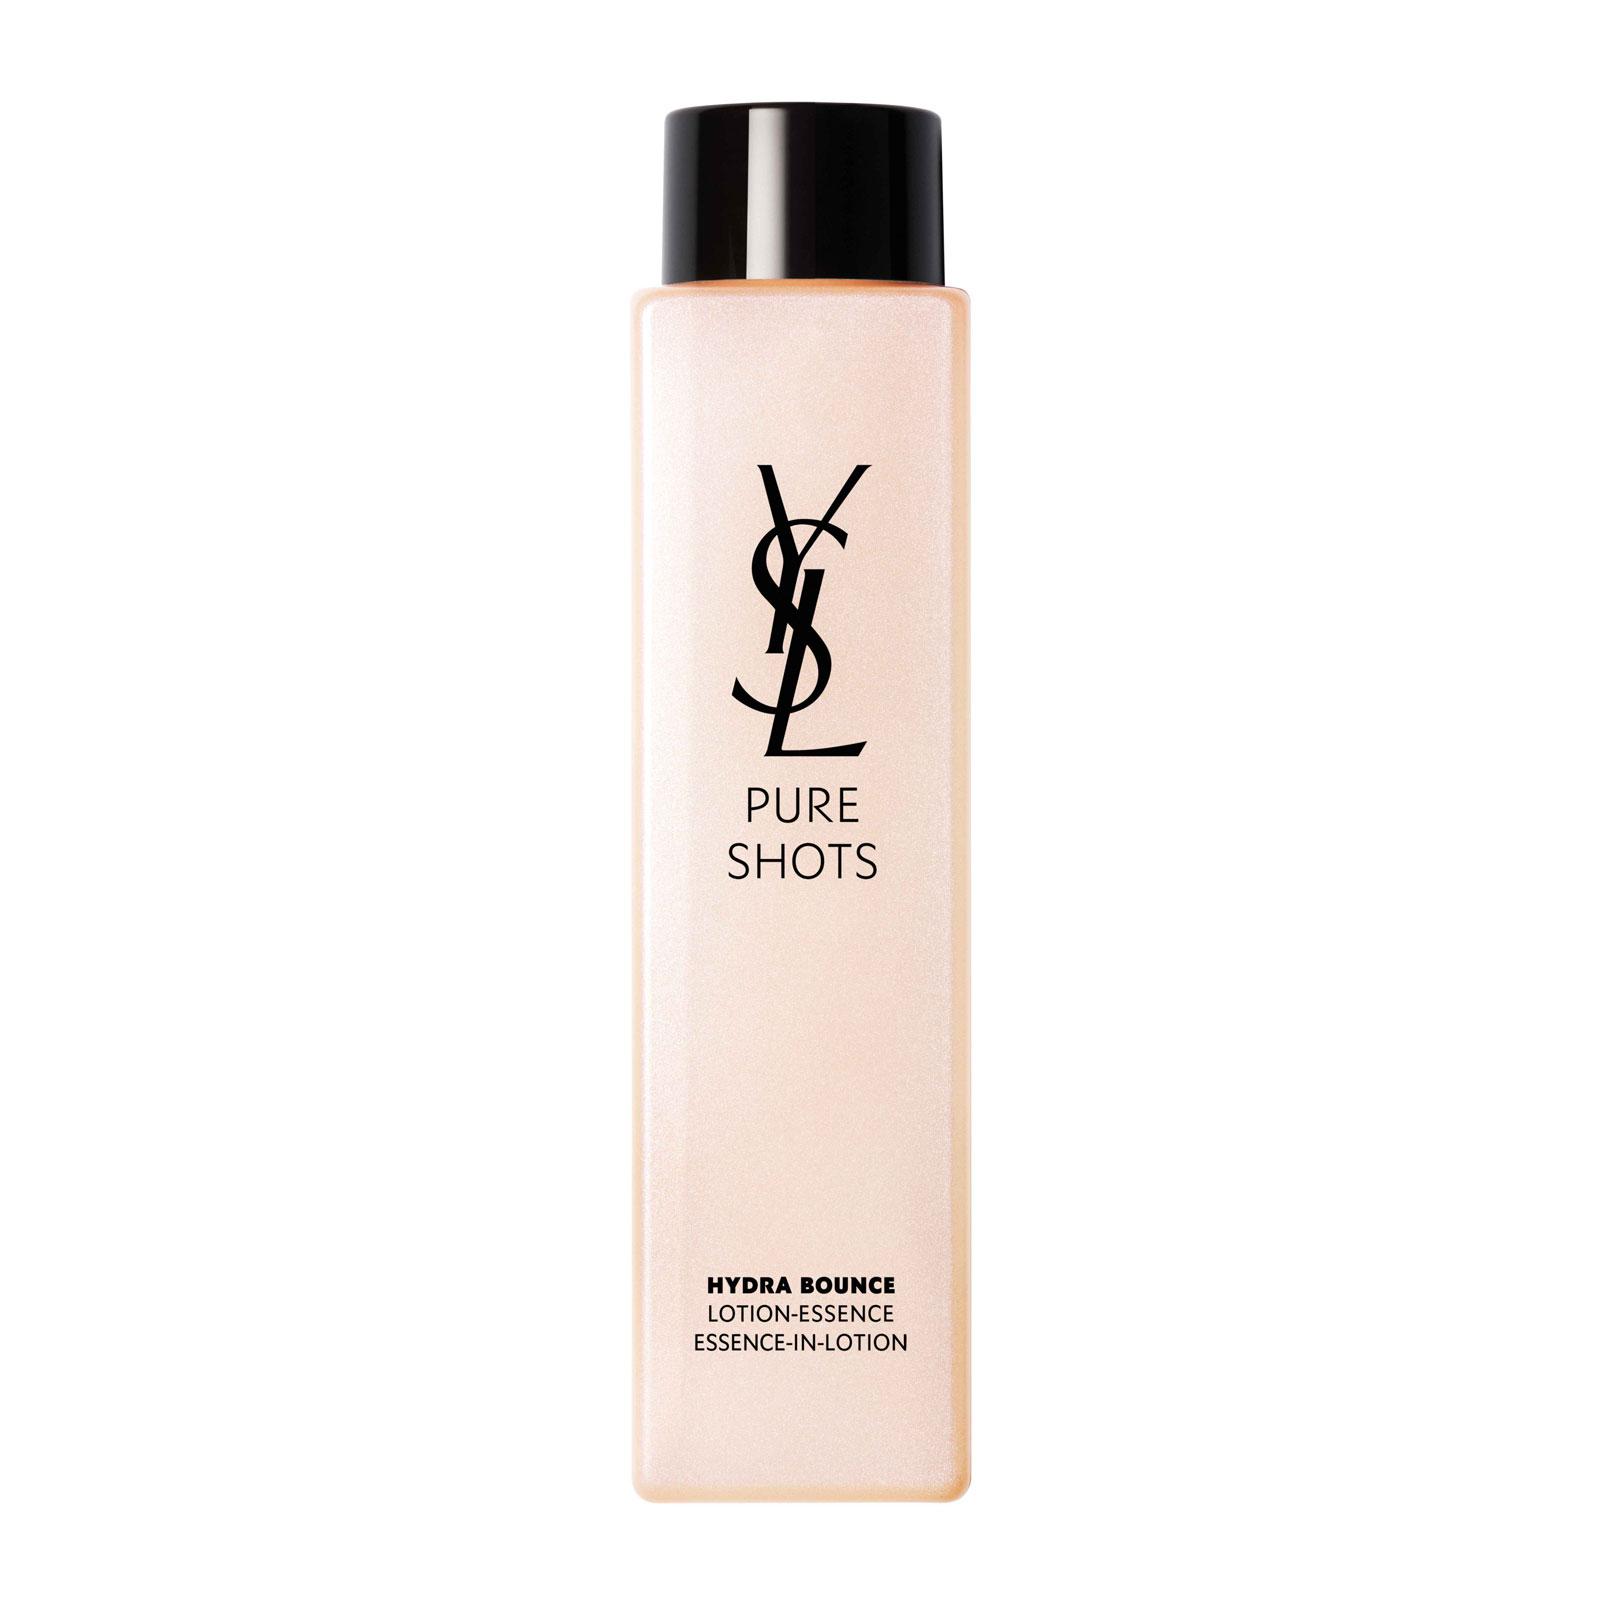 YSL Beauty Pure Shots Hydra Bounce Essence-in-Lotion 200ml - Feelunique